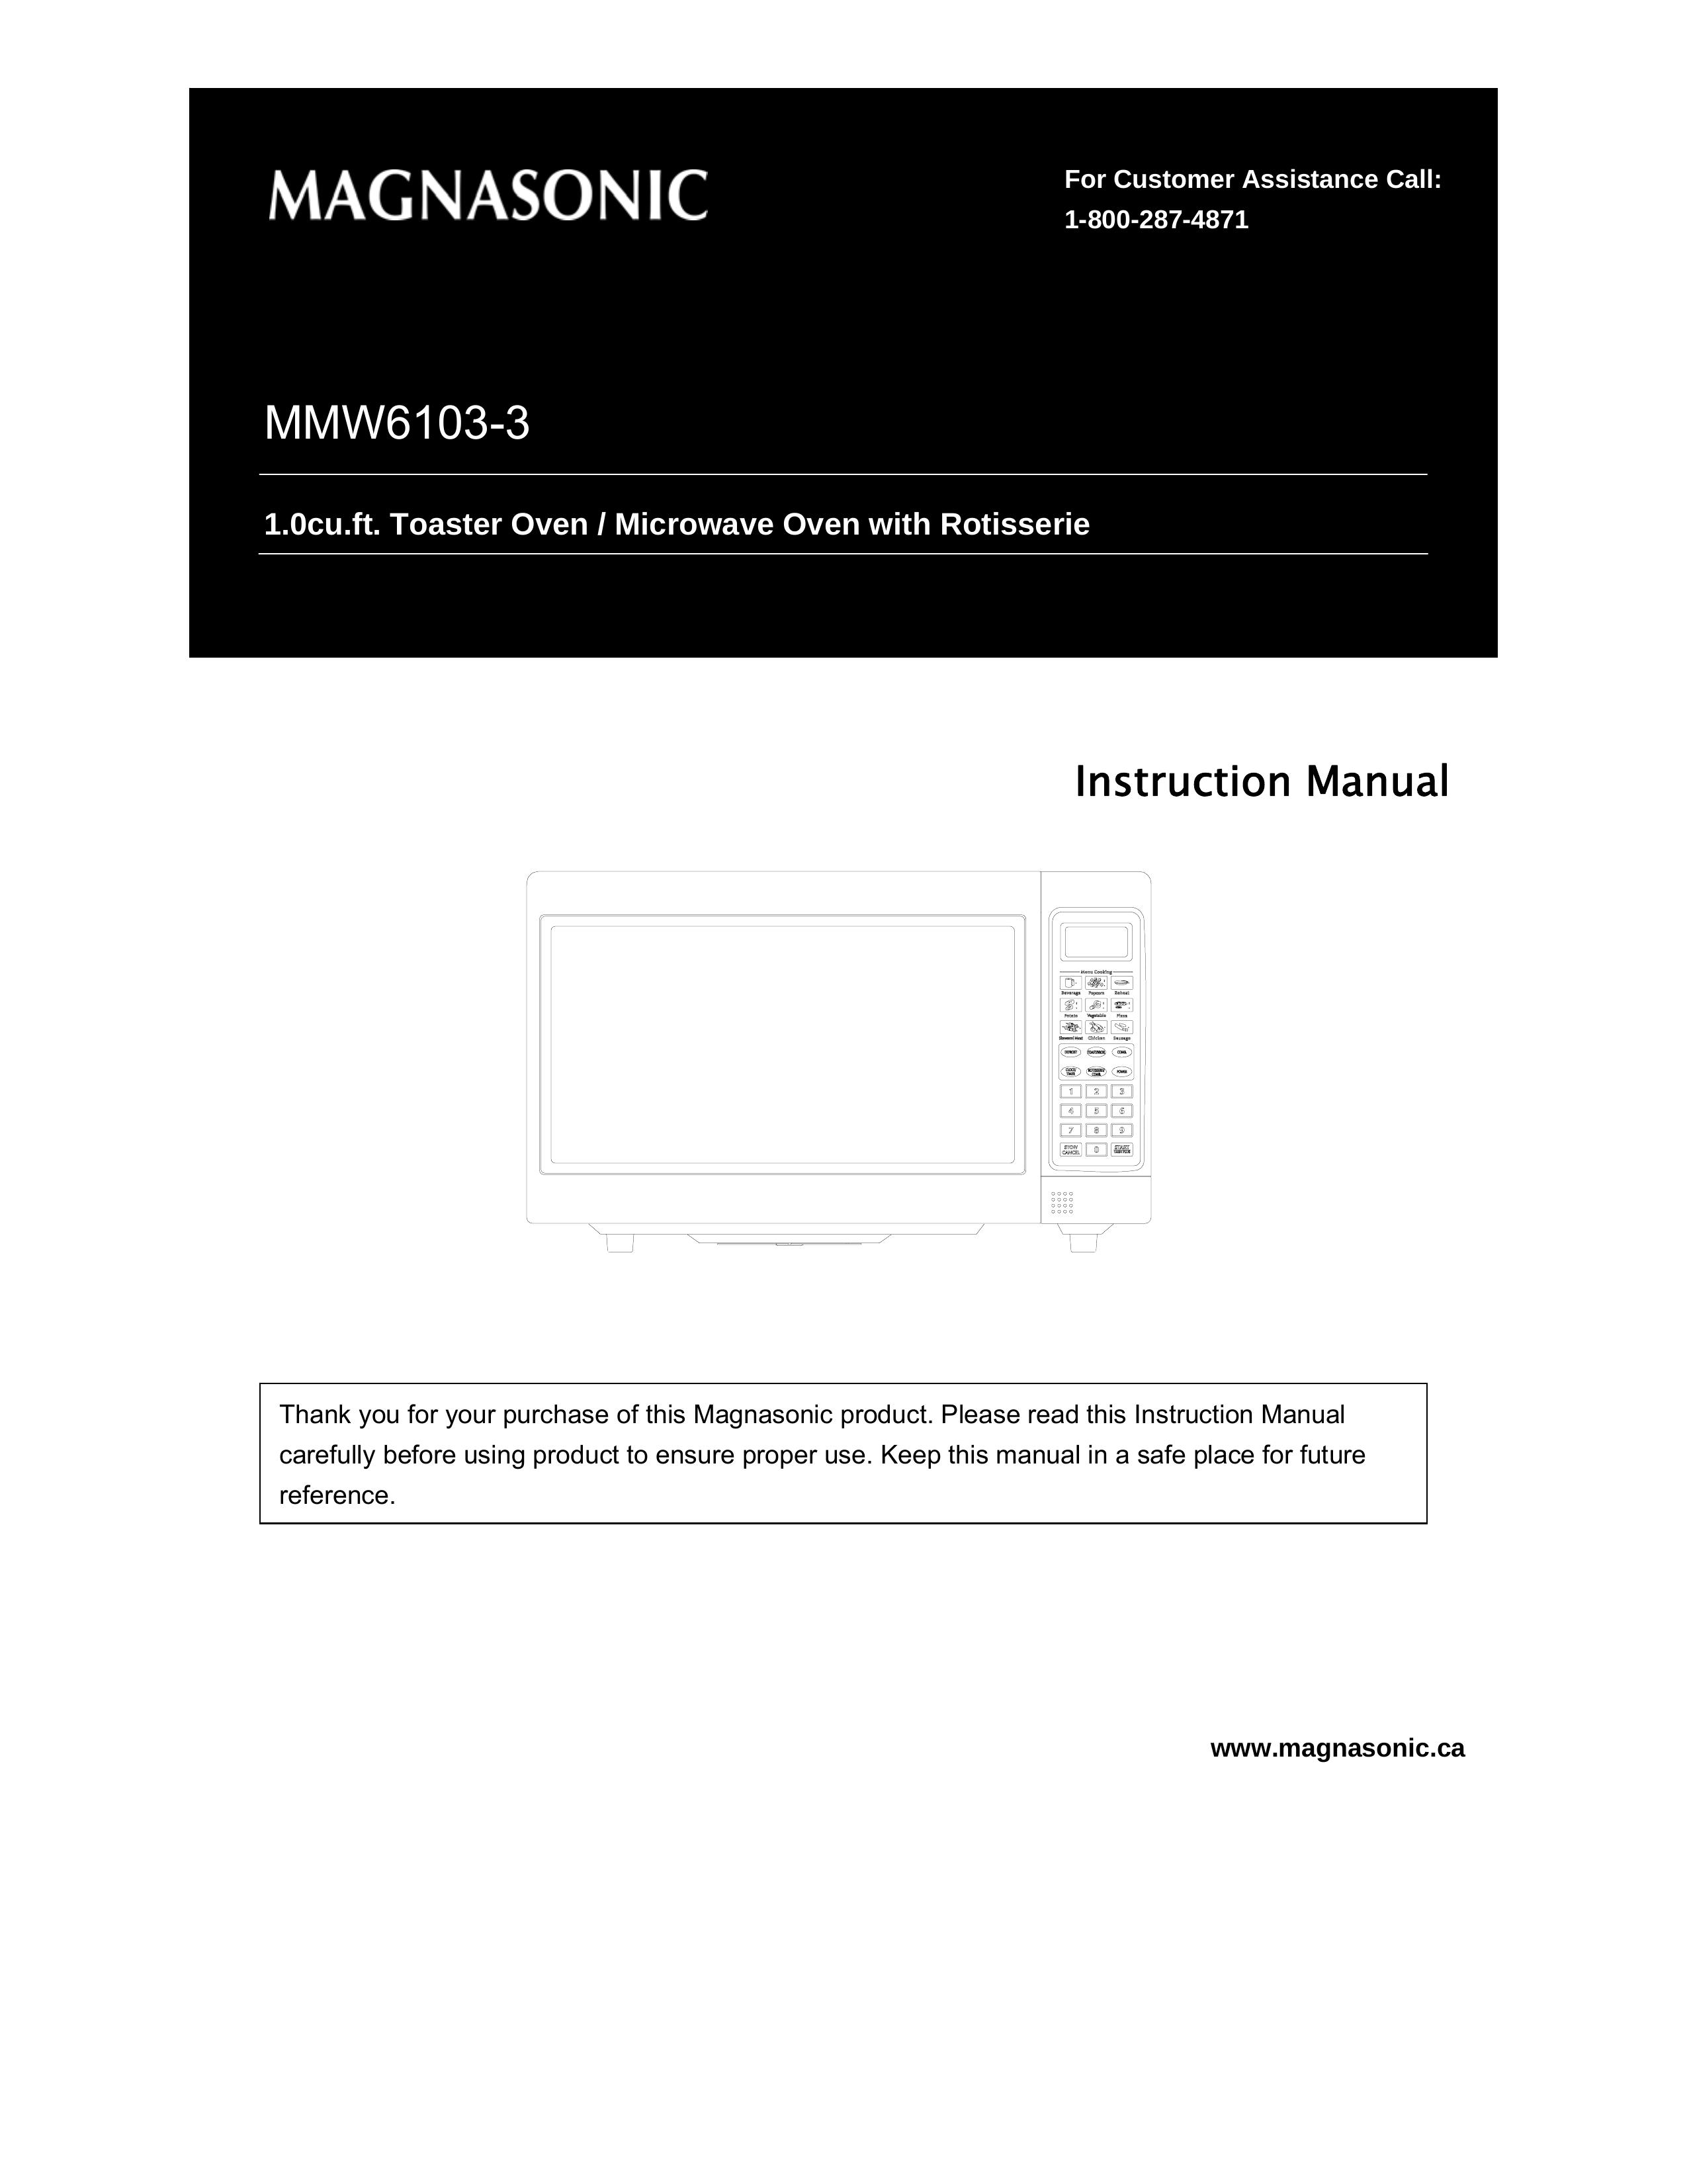 Magnasonic MMW6103-3 Toaster User Manual